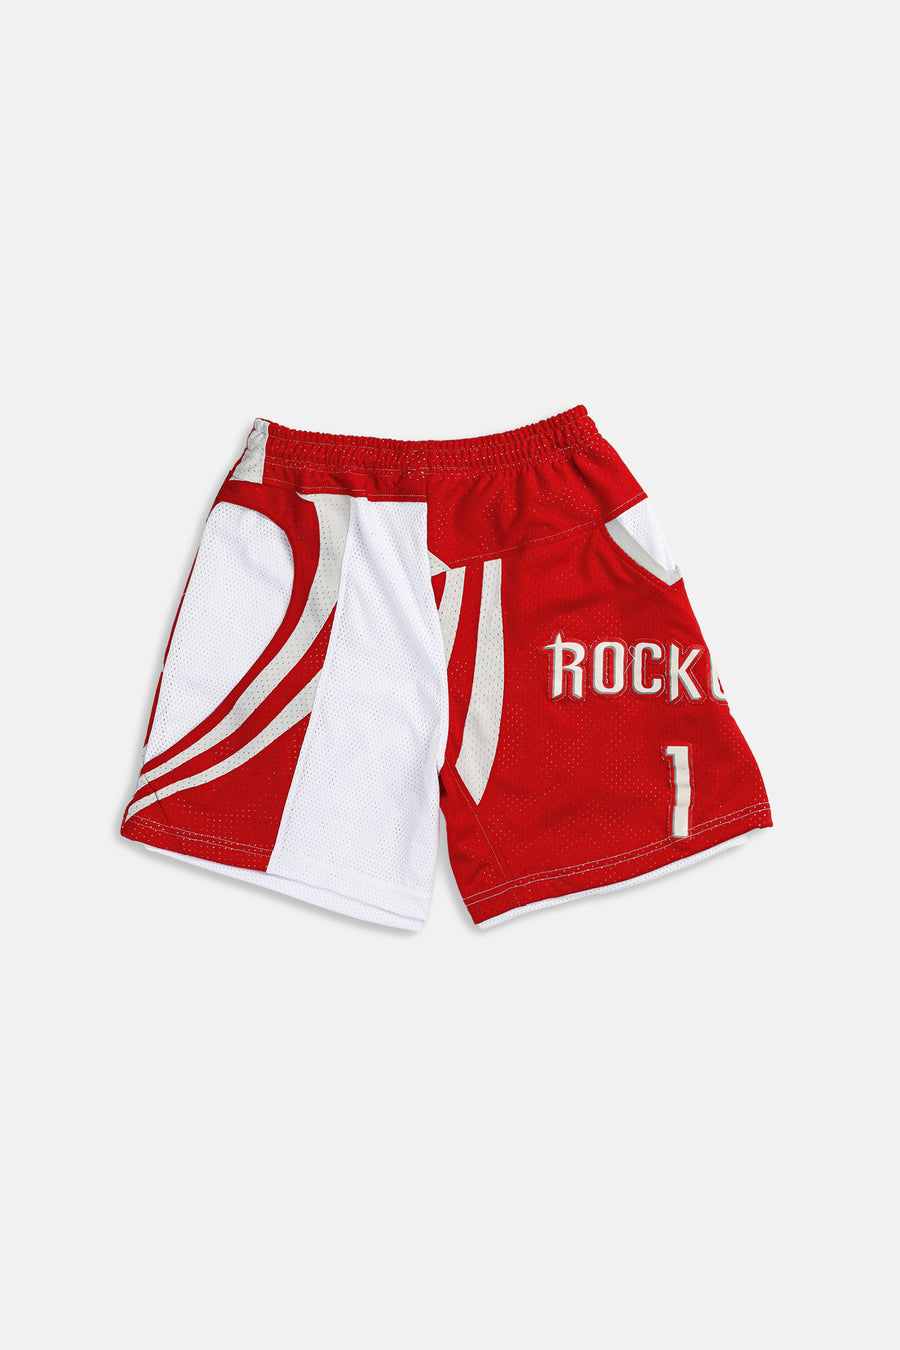 Unisex Rework Houston Rockets NBA Jersey Shorts - M